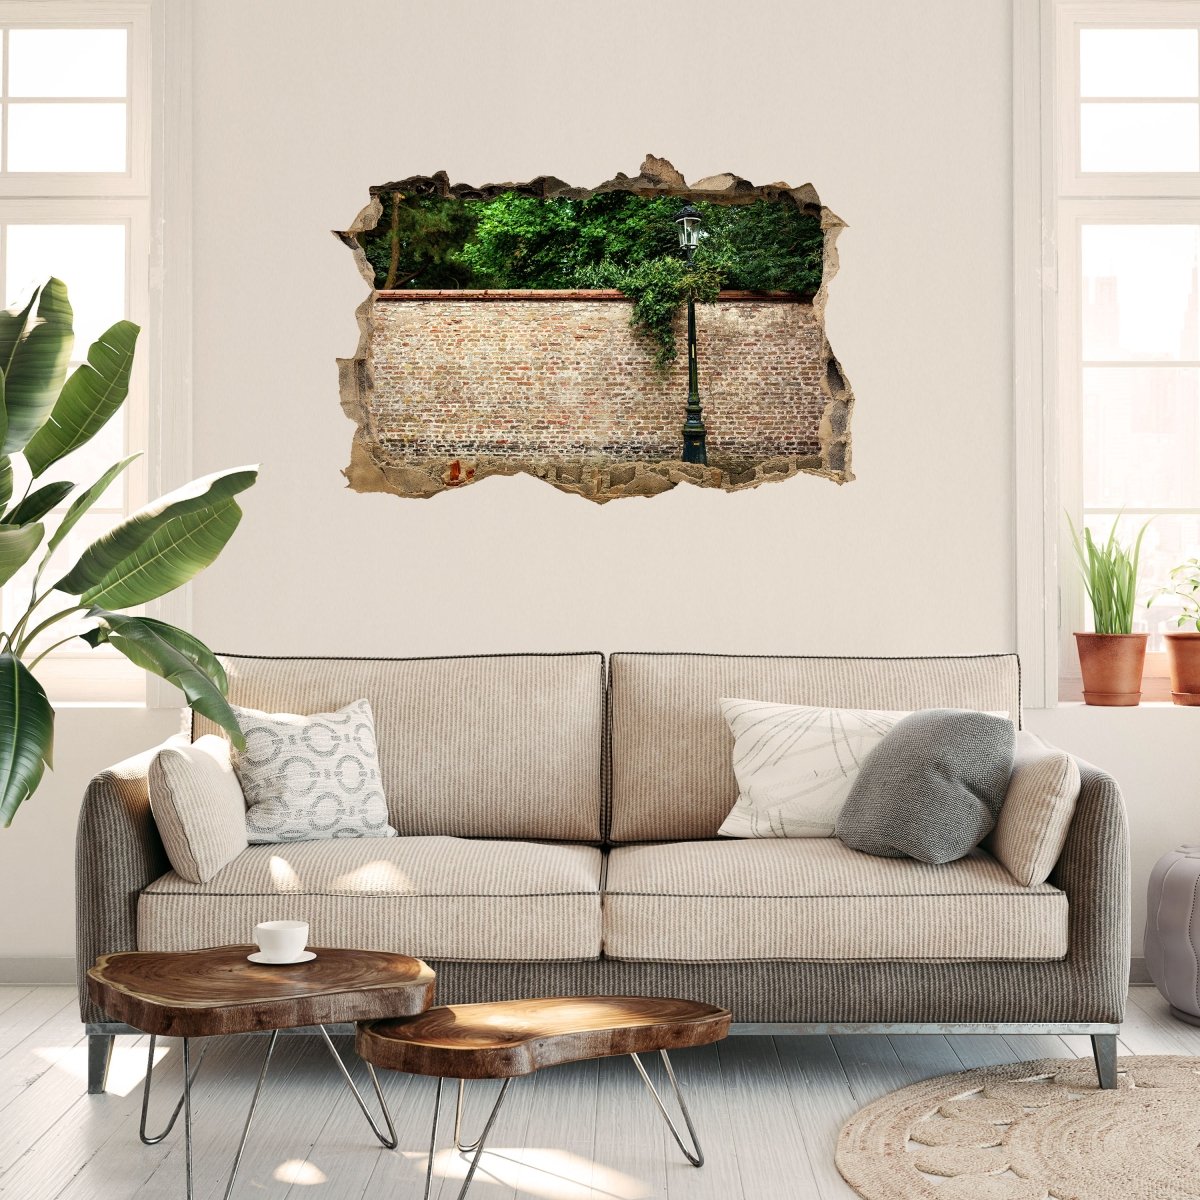 3D wall sticker wall &amp; lantern, ivy, stone wall, trees - Wall Decal M1237